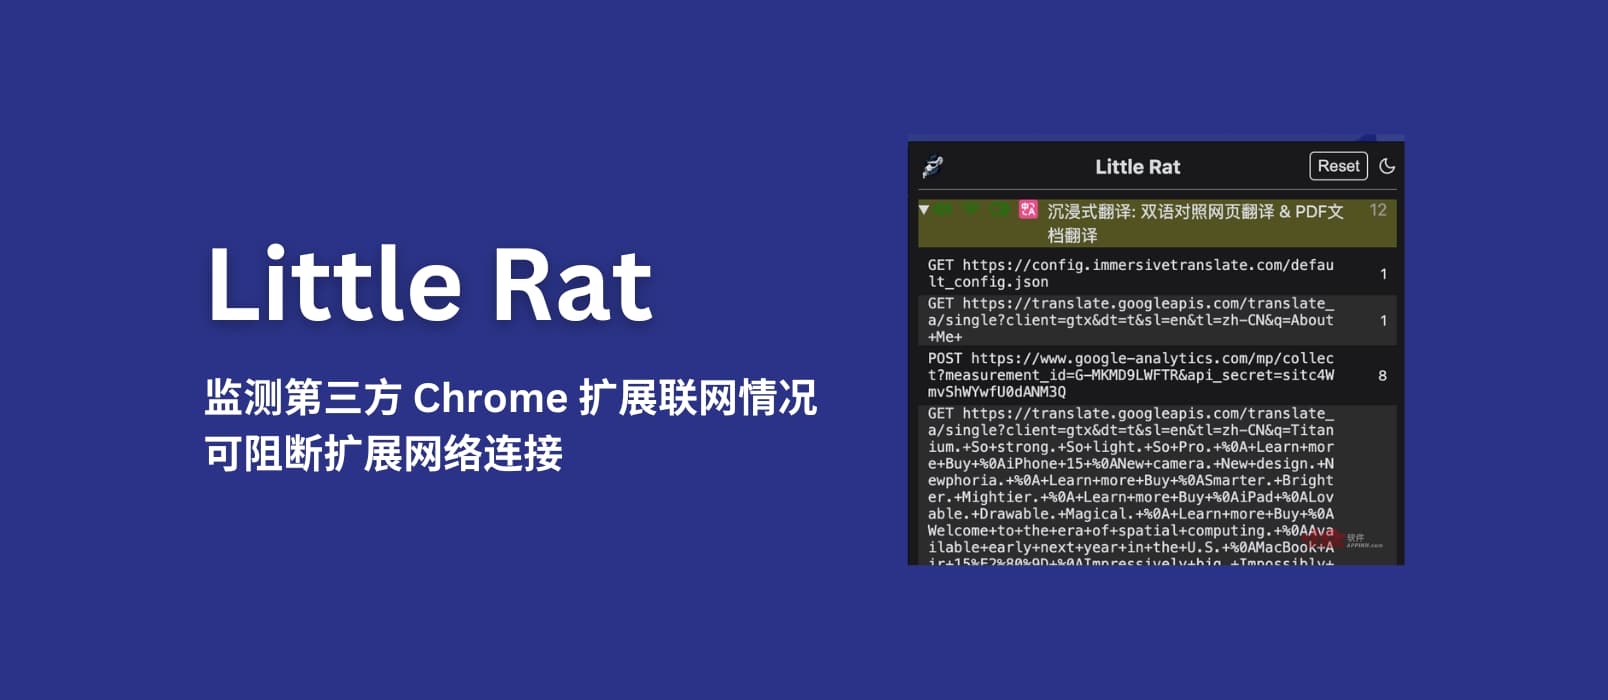 Little Rat - 监测第三方 Chrome 扩展联网情况，可阻断扩展网络连接 1